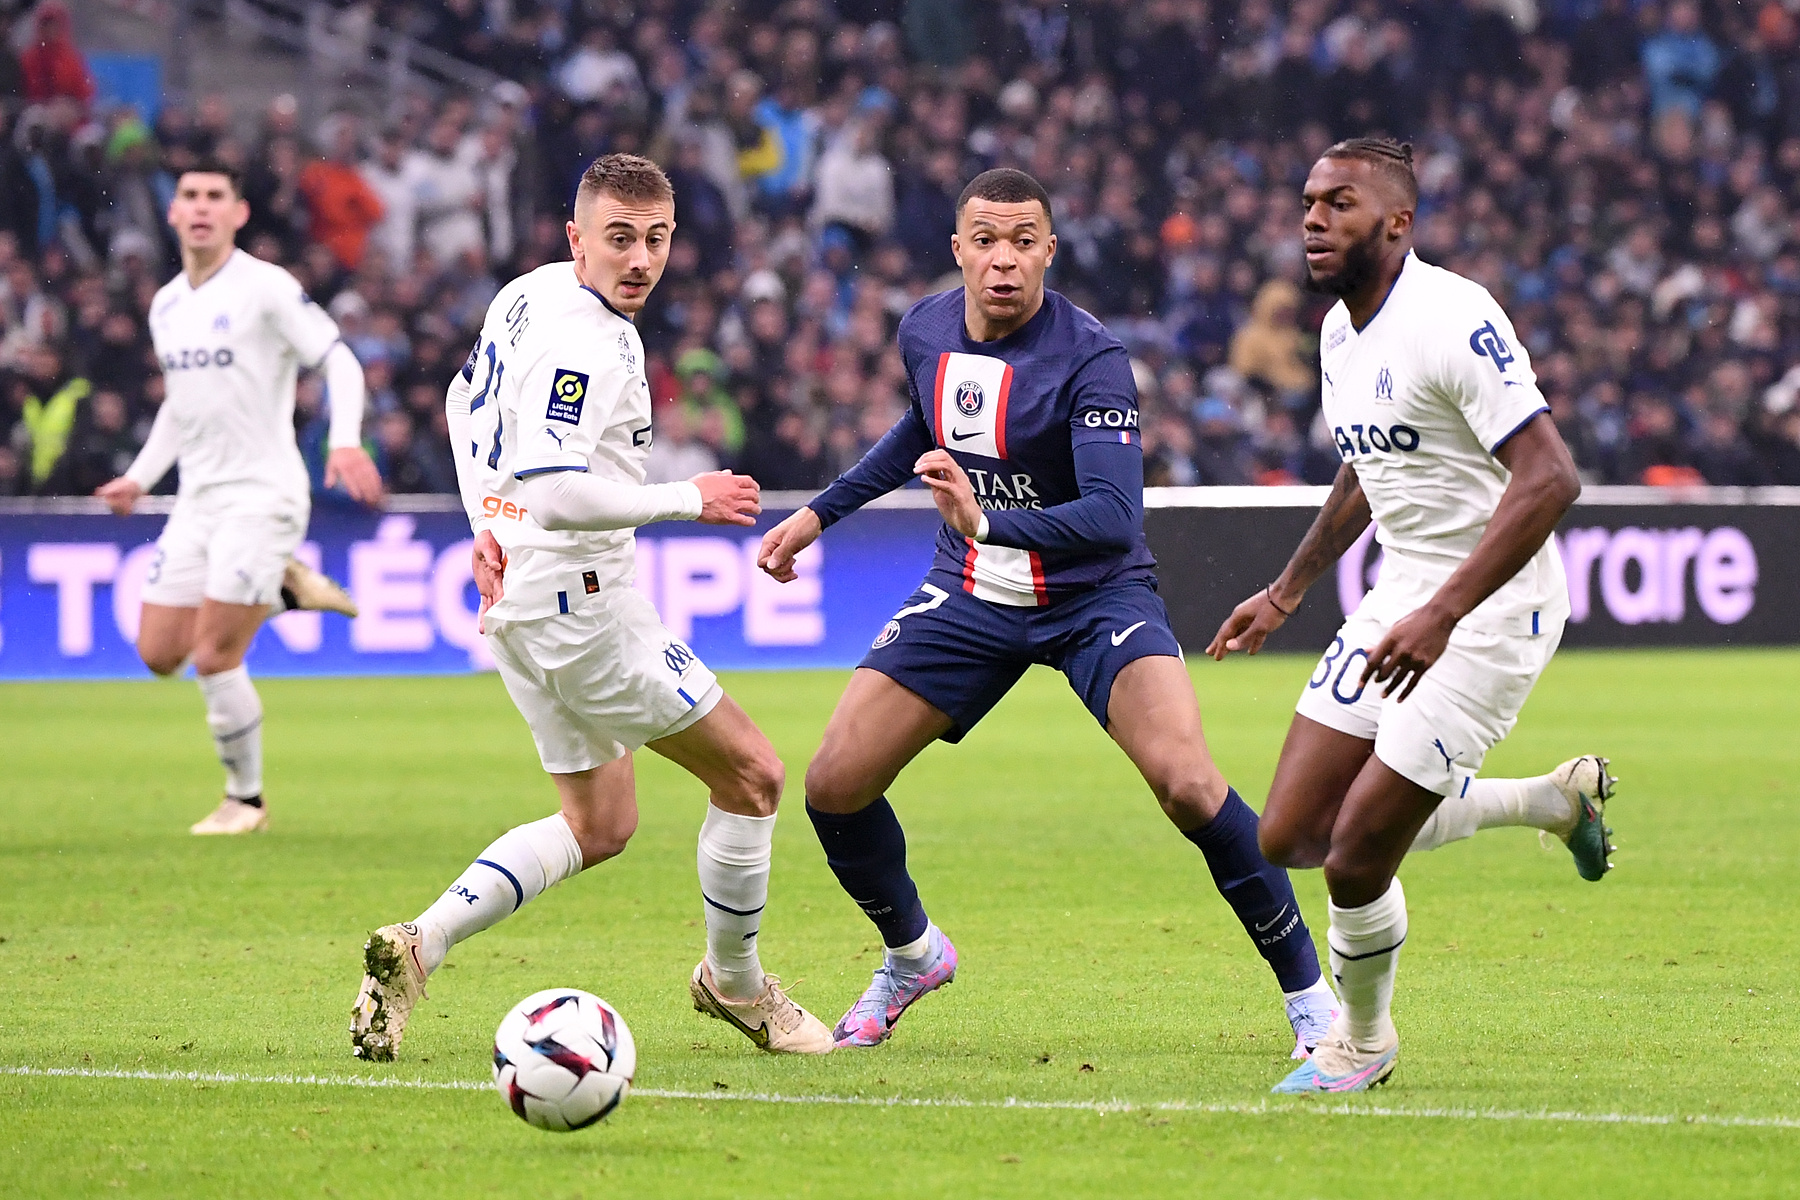 PSG – Olympique Marsylia typy i kursy bukmacherskie